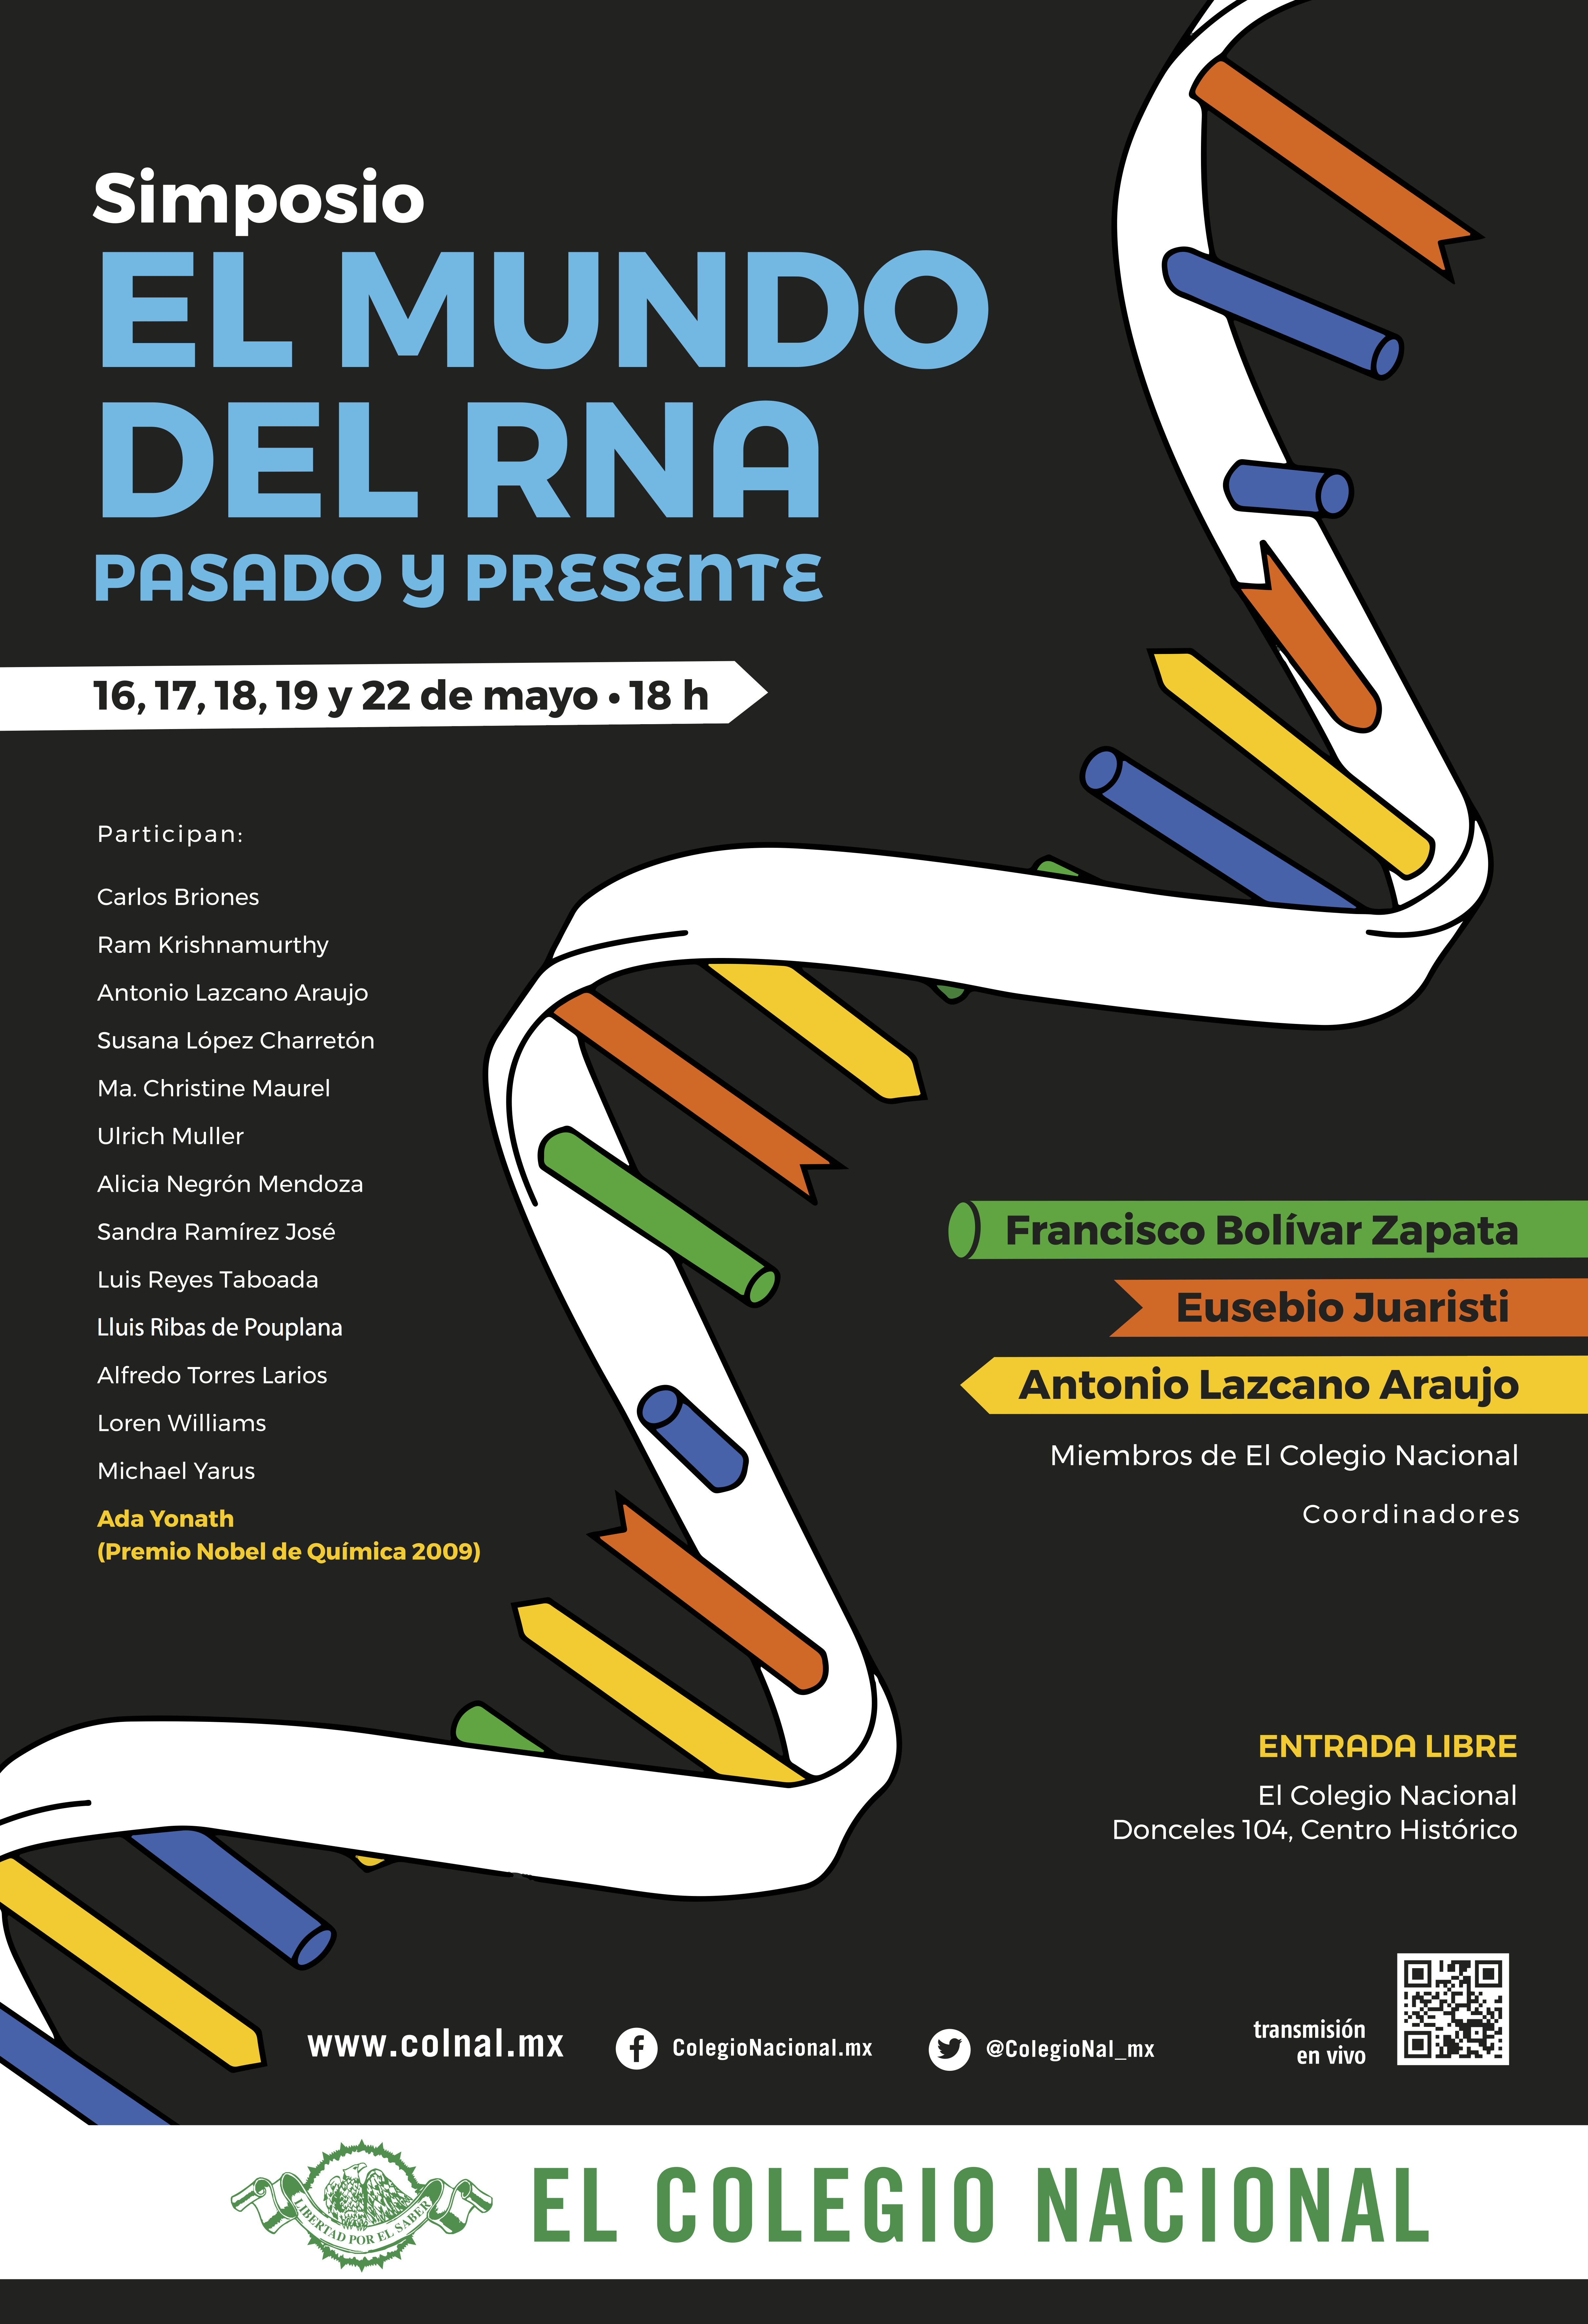 RNA World Symposium Mexico City